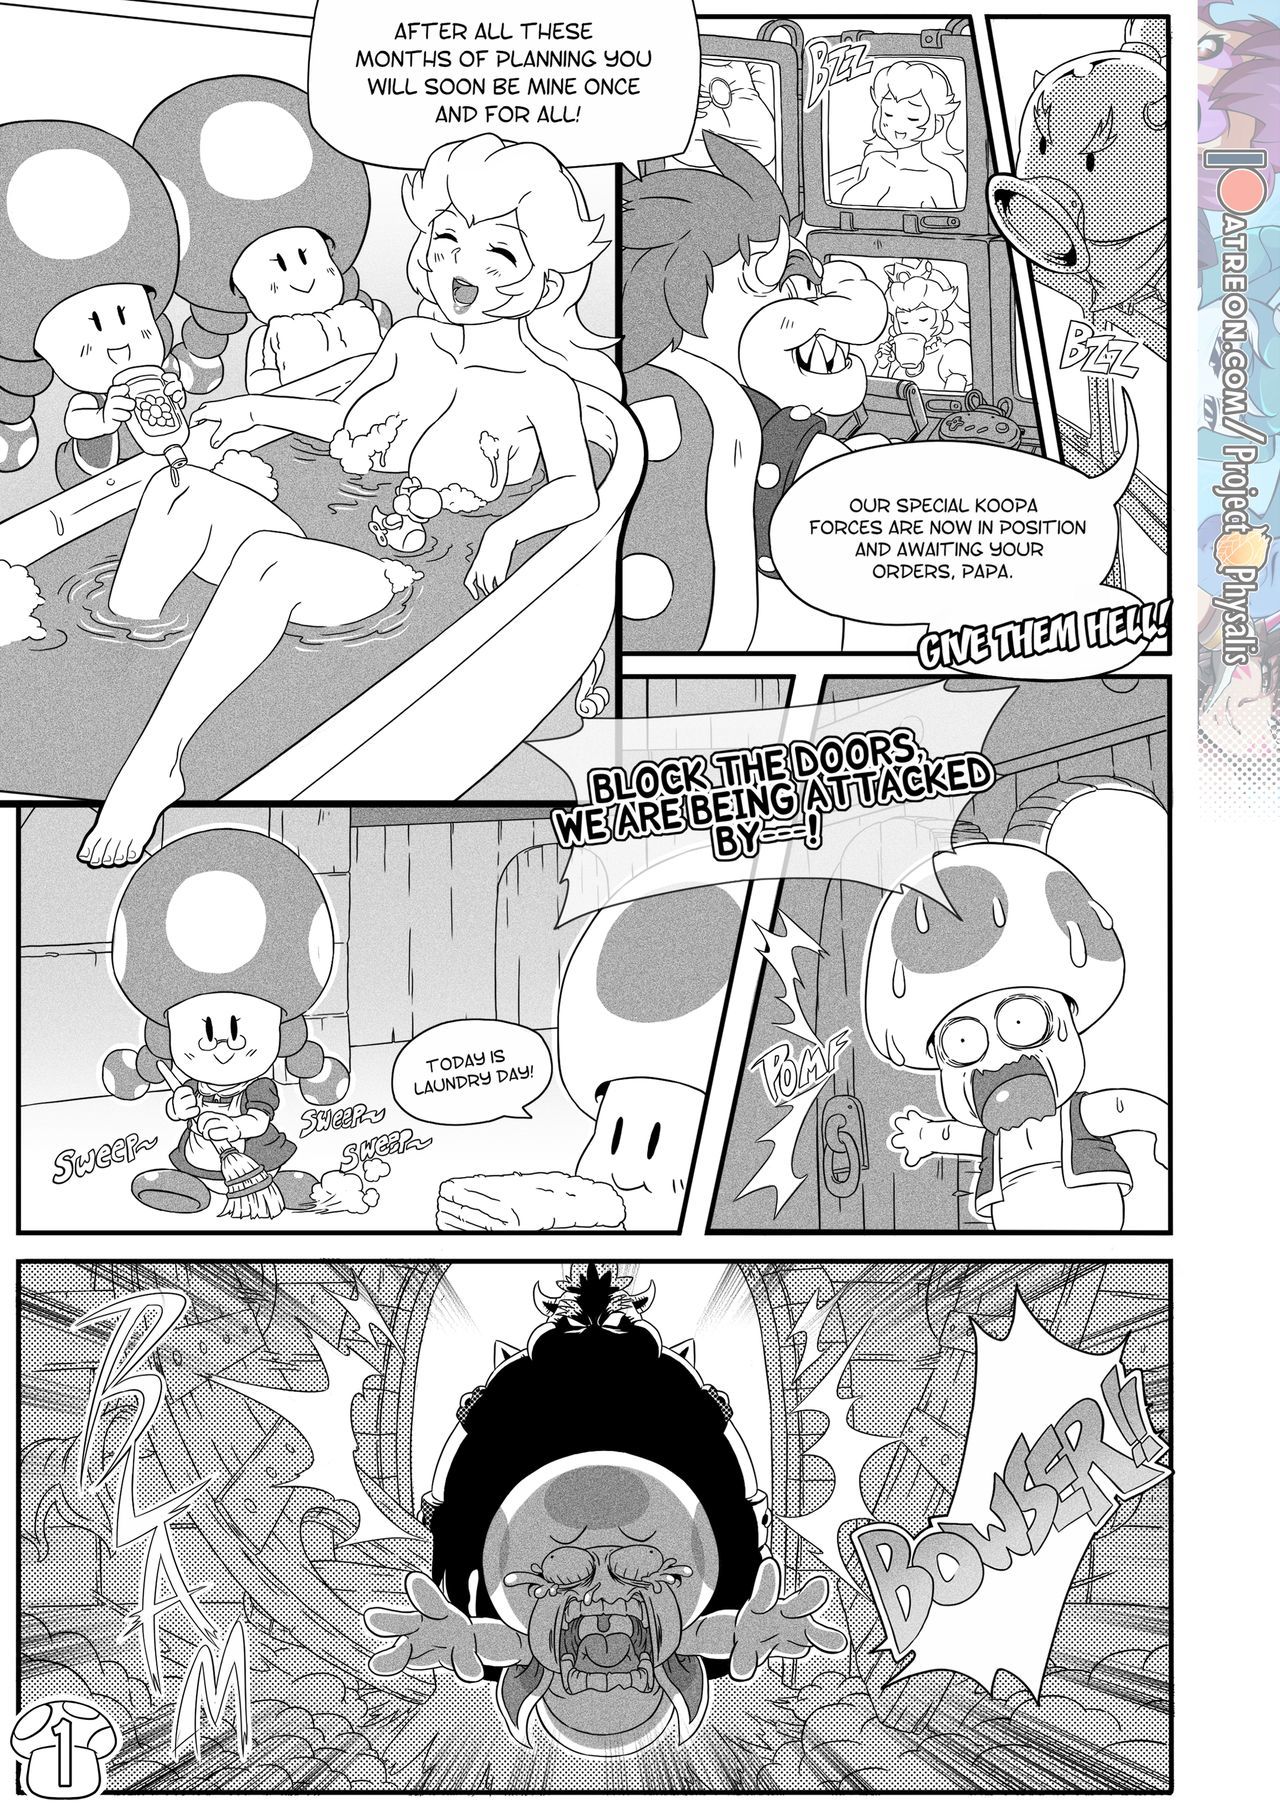 Princess Conquest (Super Mario Bros.) by Project physalis page 2